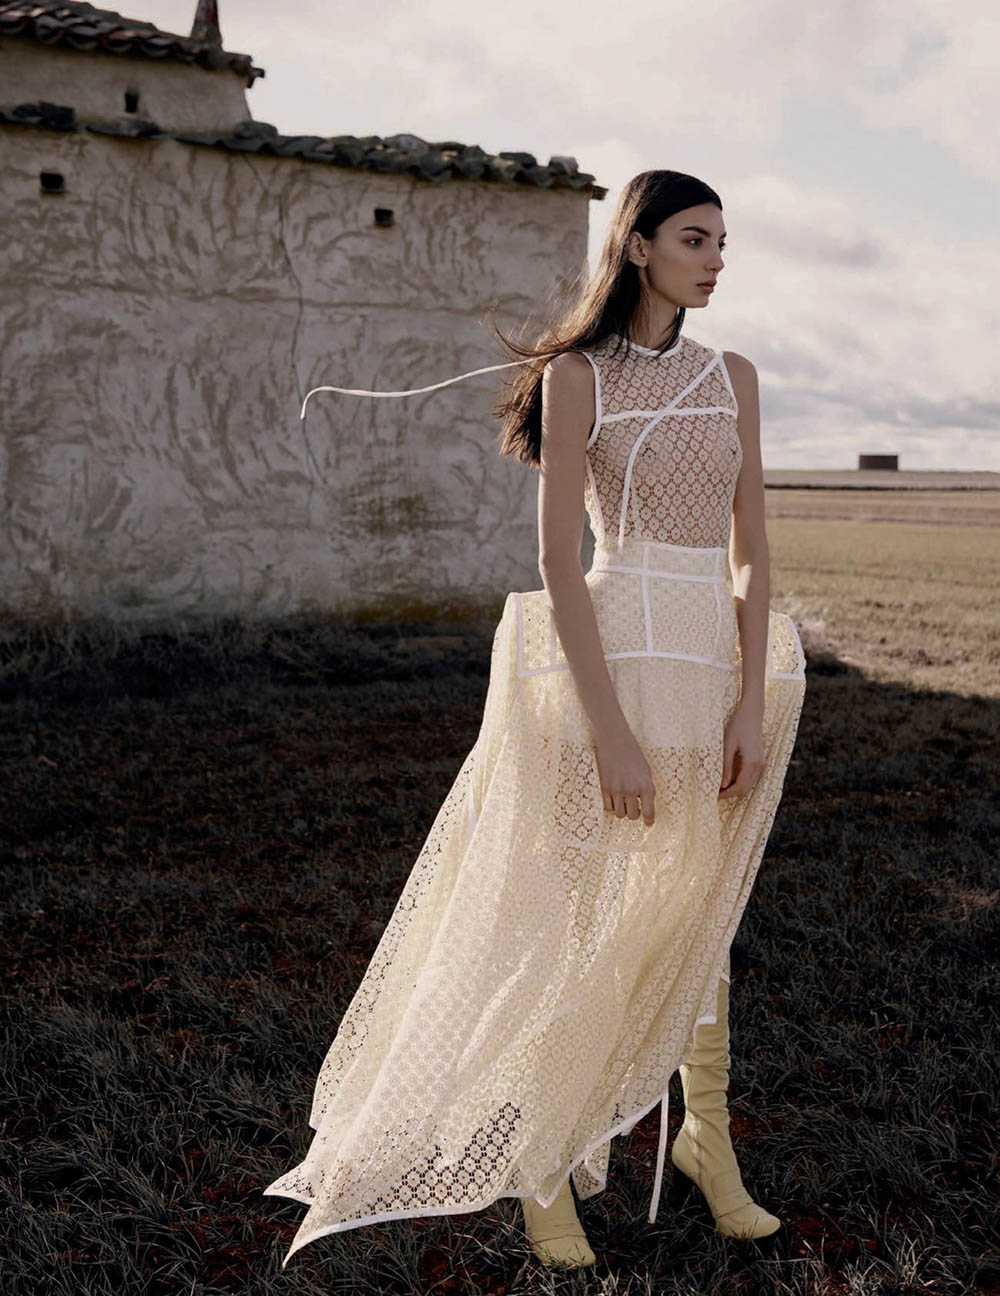 Cynthia Arrebola by Anya Holdstock for Vogue Spain February 2020